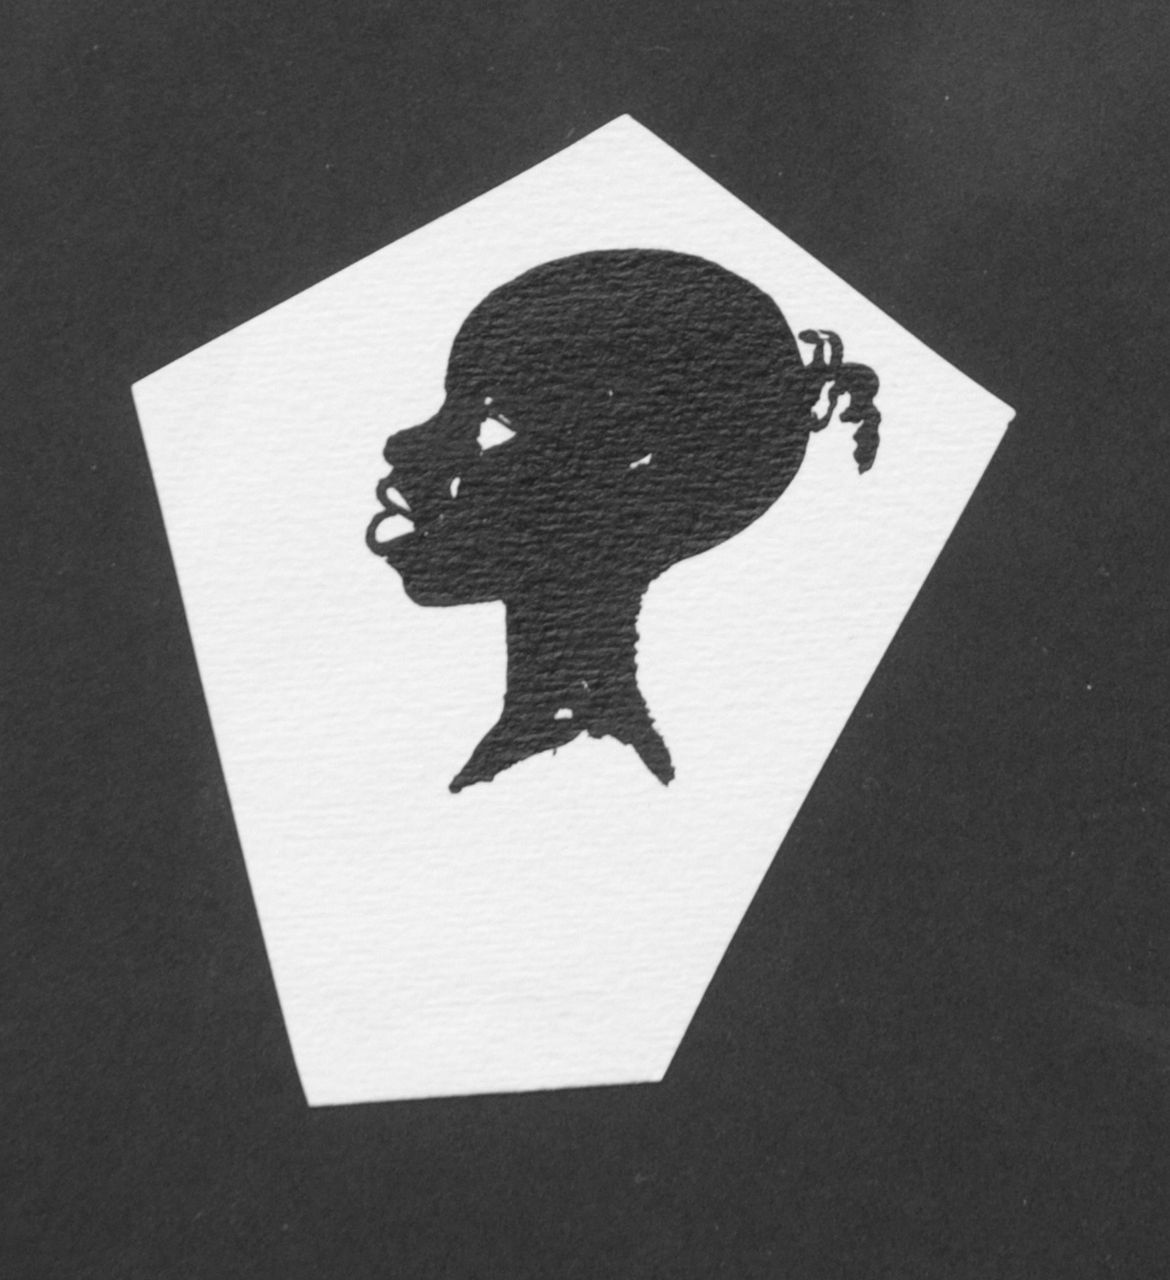 Oranje-Nassau (Prinses Beatrix) B.W.A. van | Beatrix Wilhelmina Armgard van Oranje-Nassau (Prinses Beatrix), En profil head, pencil and black ink on paper 9.0 x 8.1 cm, executed August 1960